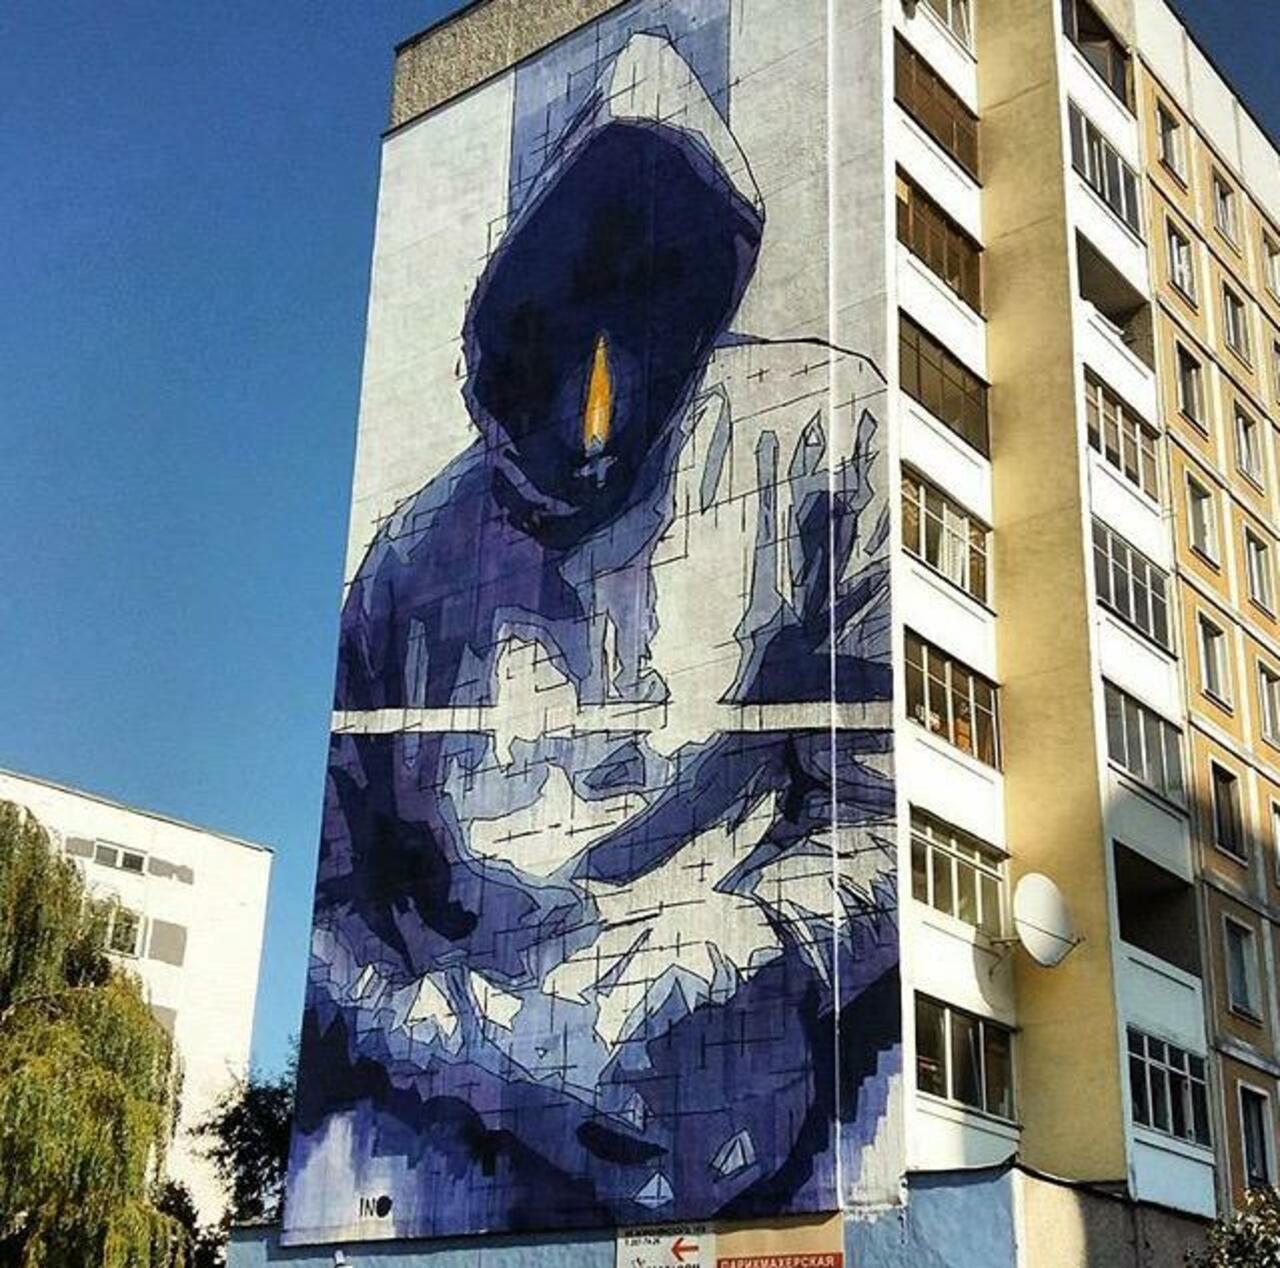 'Man With No Name' 
New Street Art by iNO in Minsk, Belarus 

#art #graffiti #mural #streetart http://t.co/lUuPvegL23